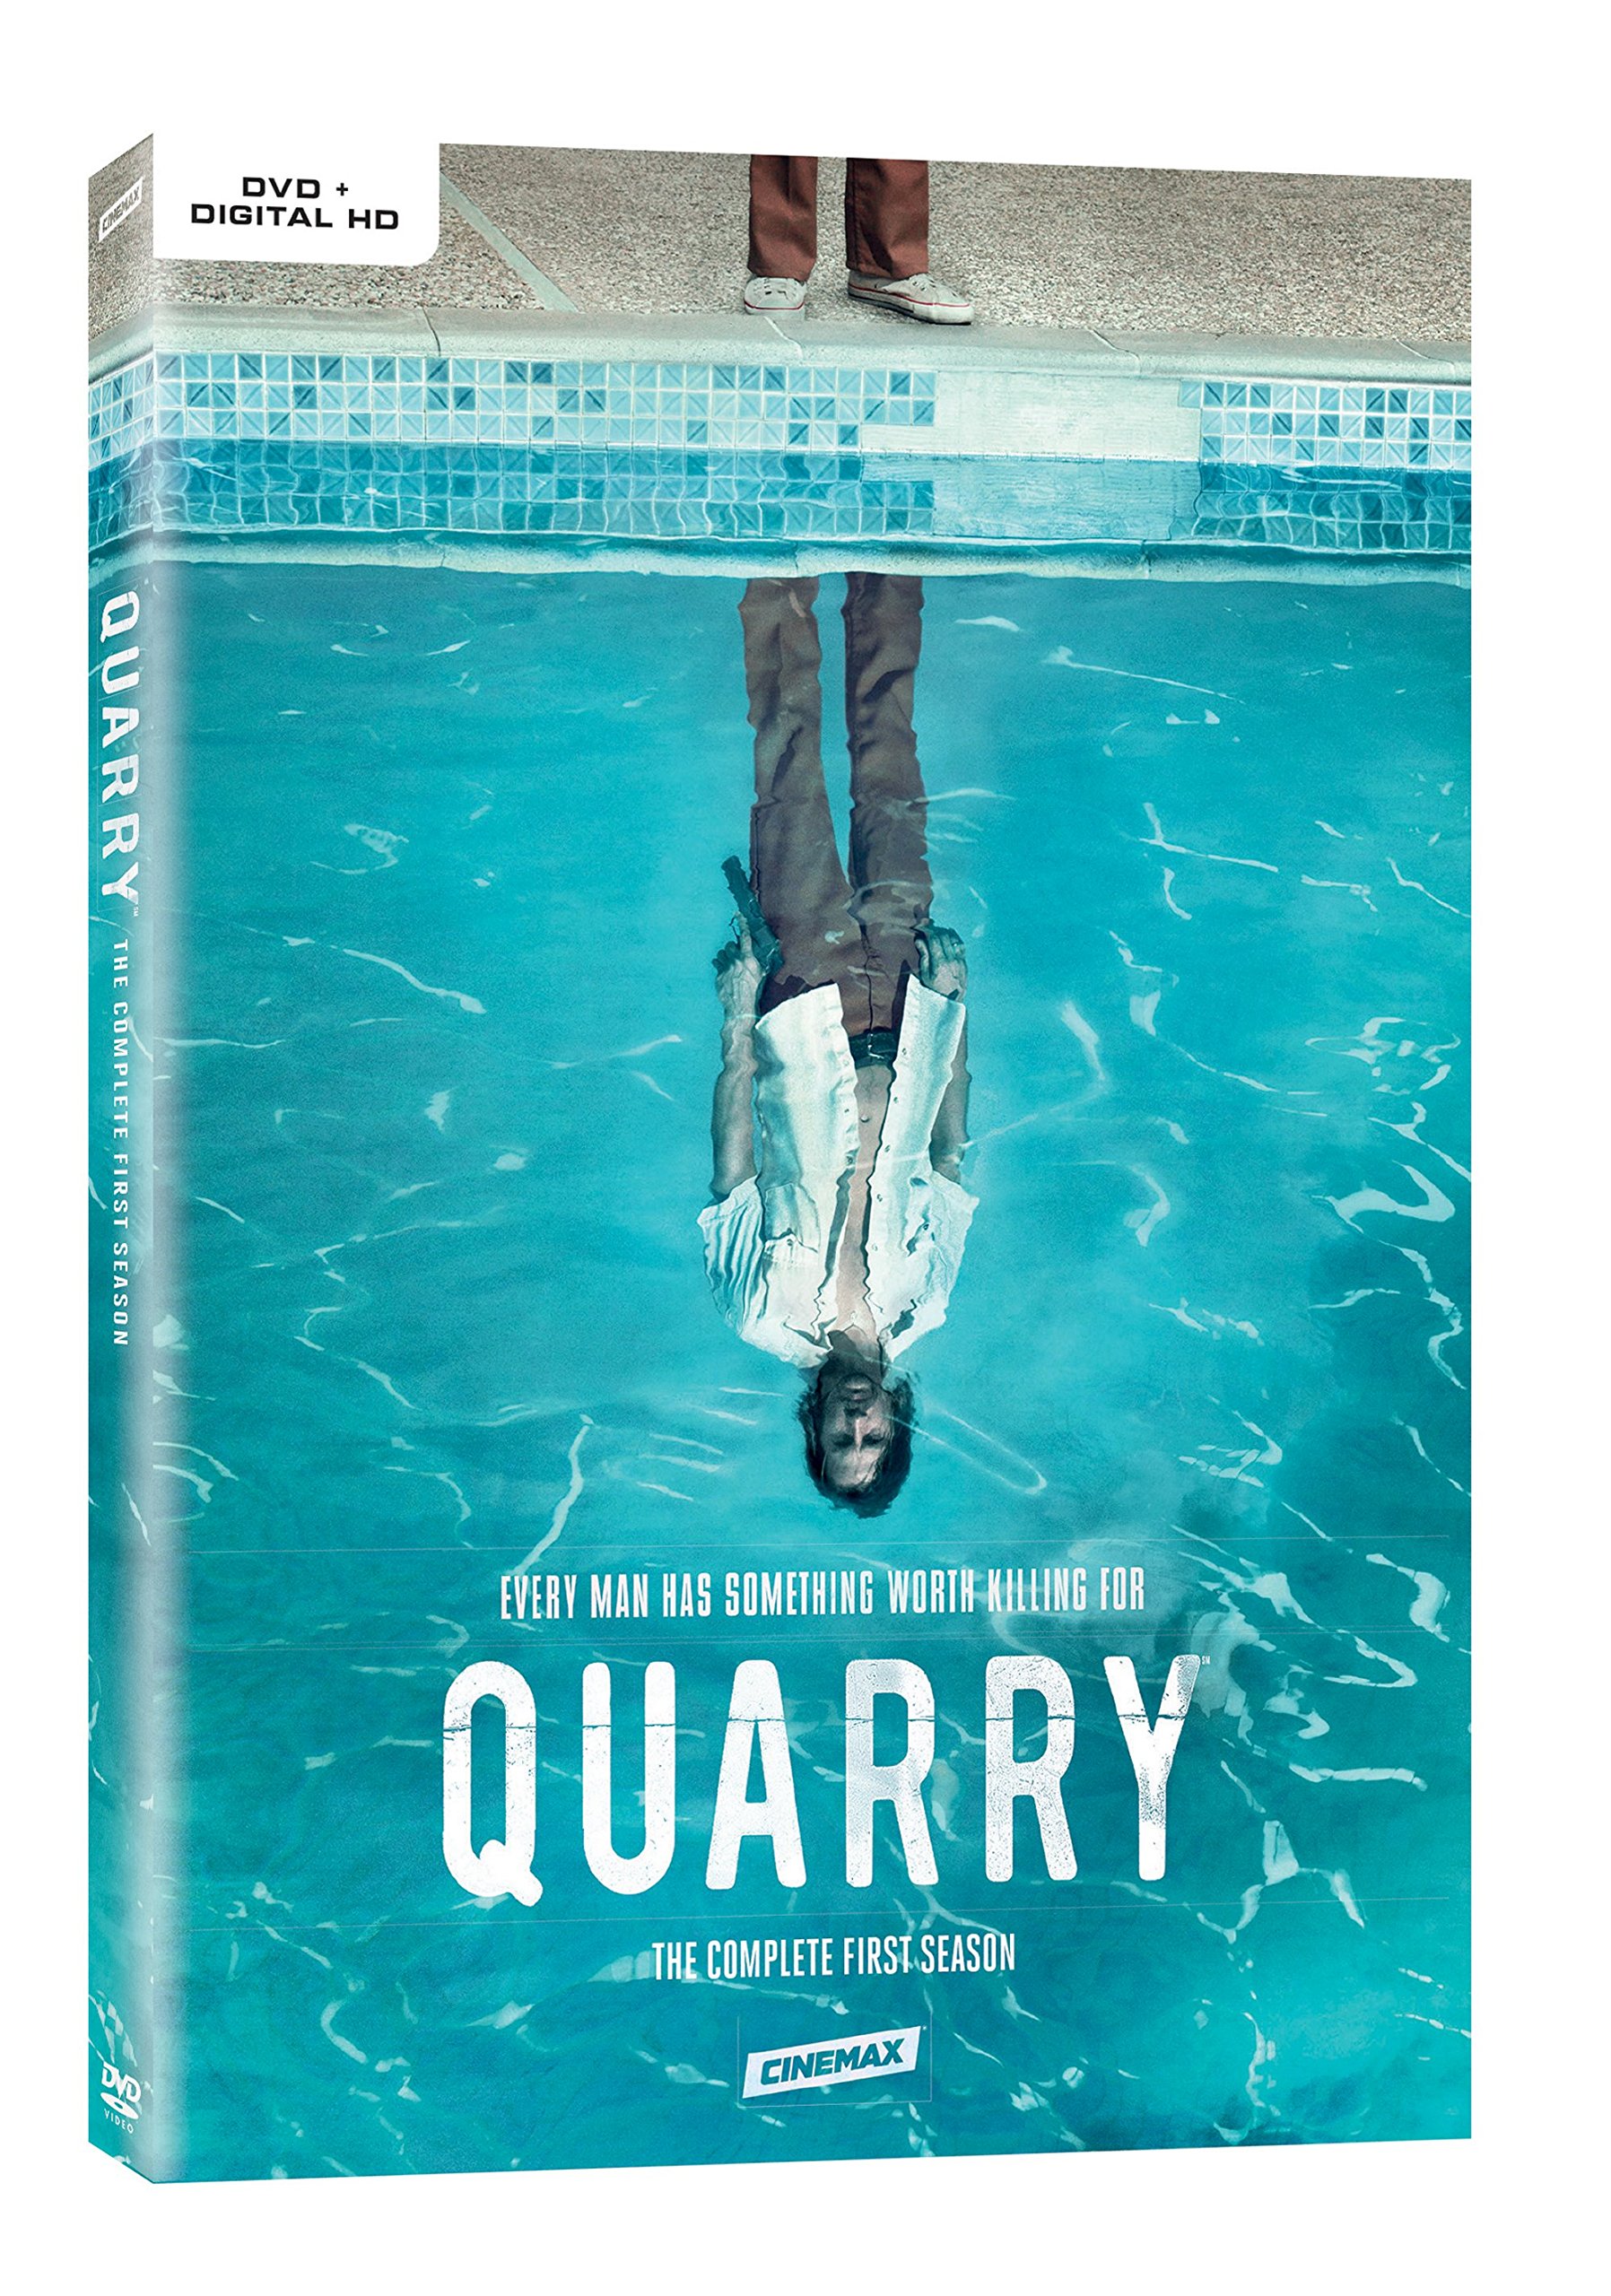 Quarry DVD Release Date1796 x 2560